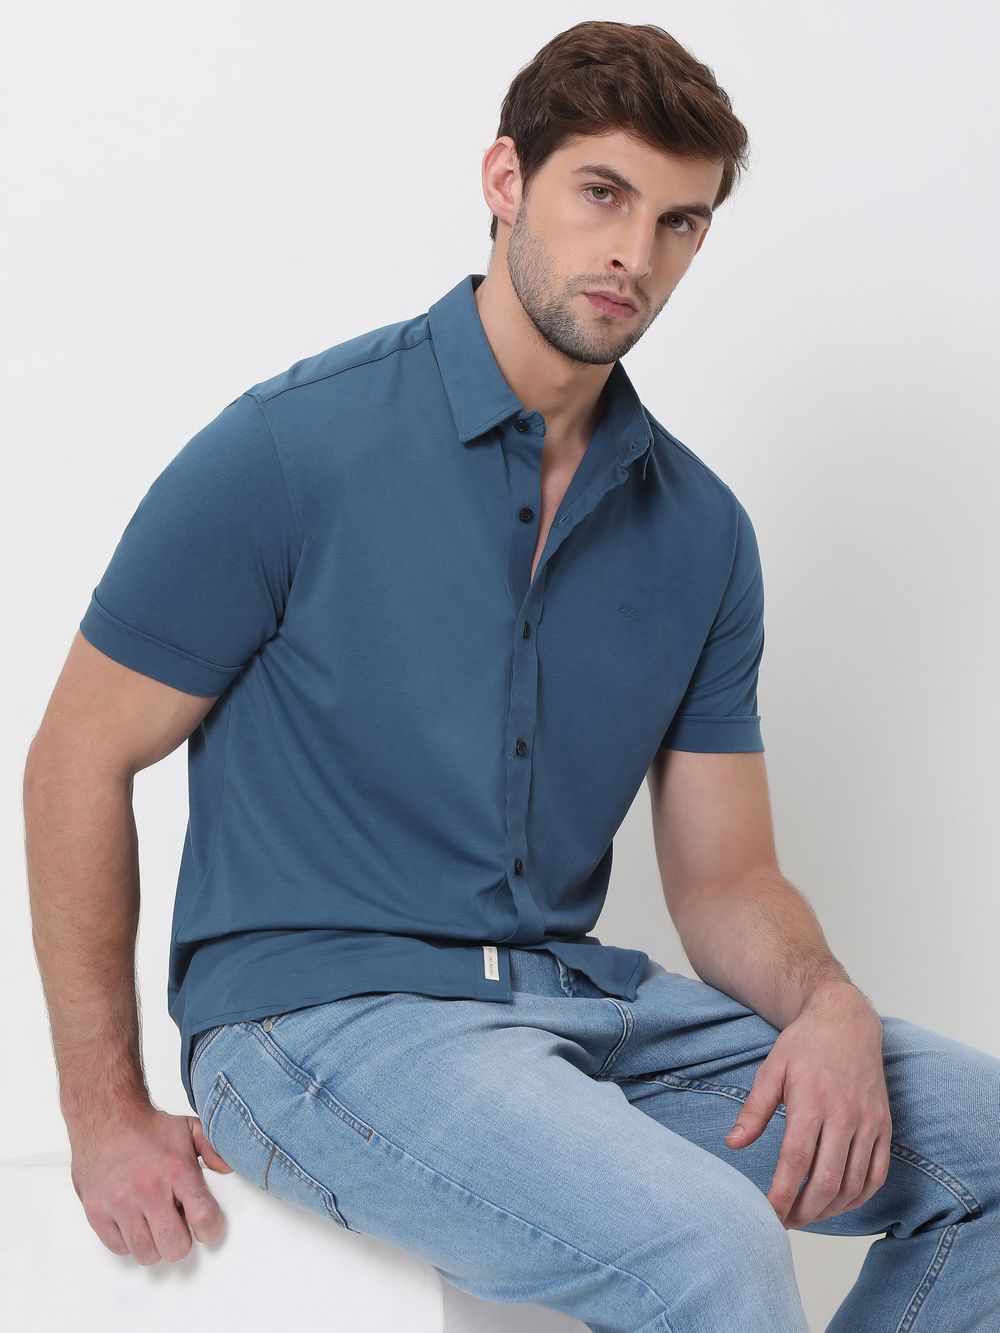 Blue Stretch Plain Shirt